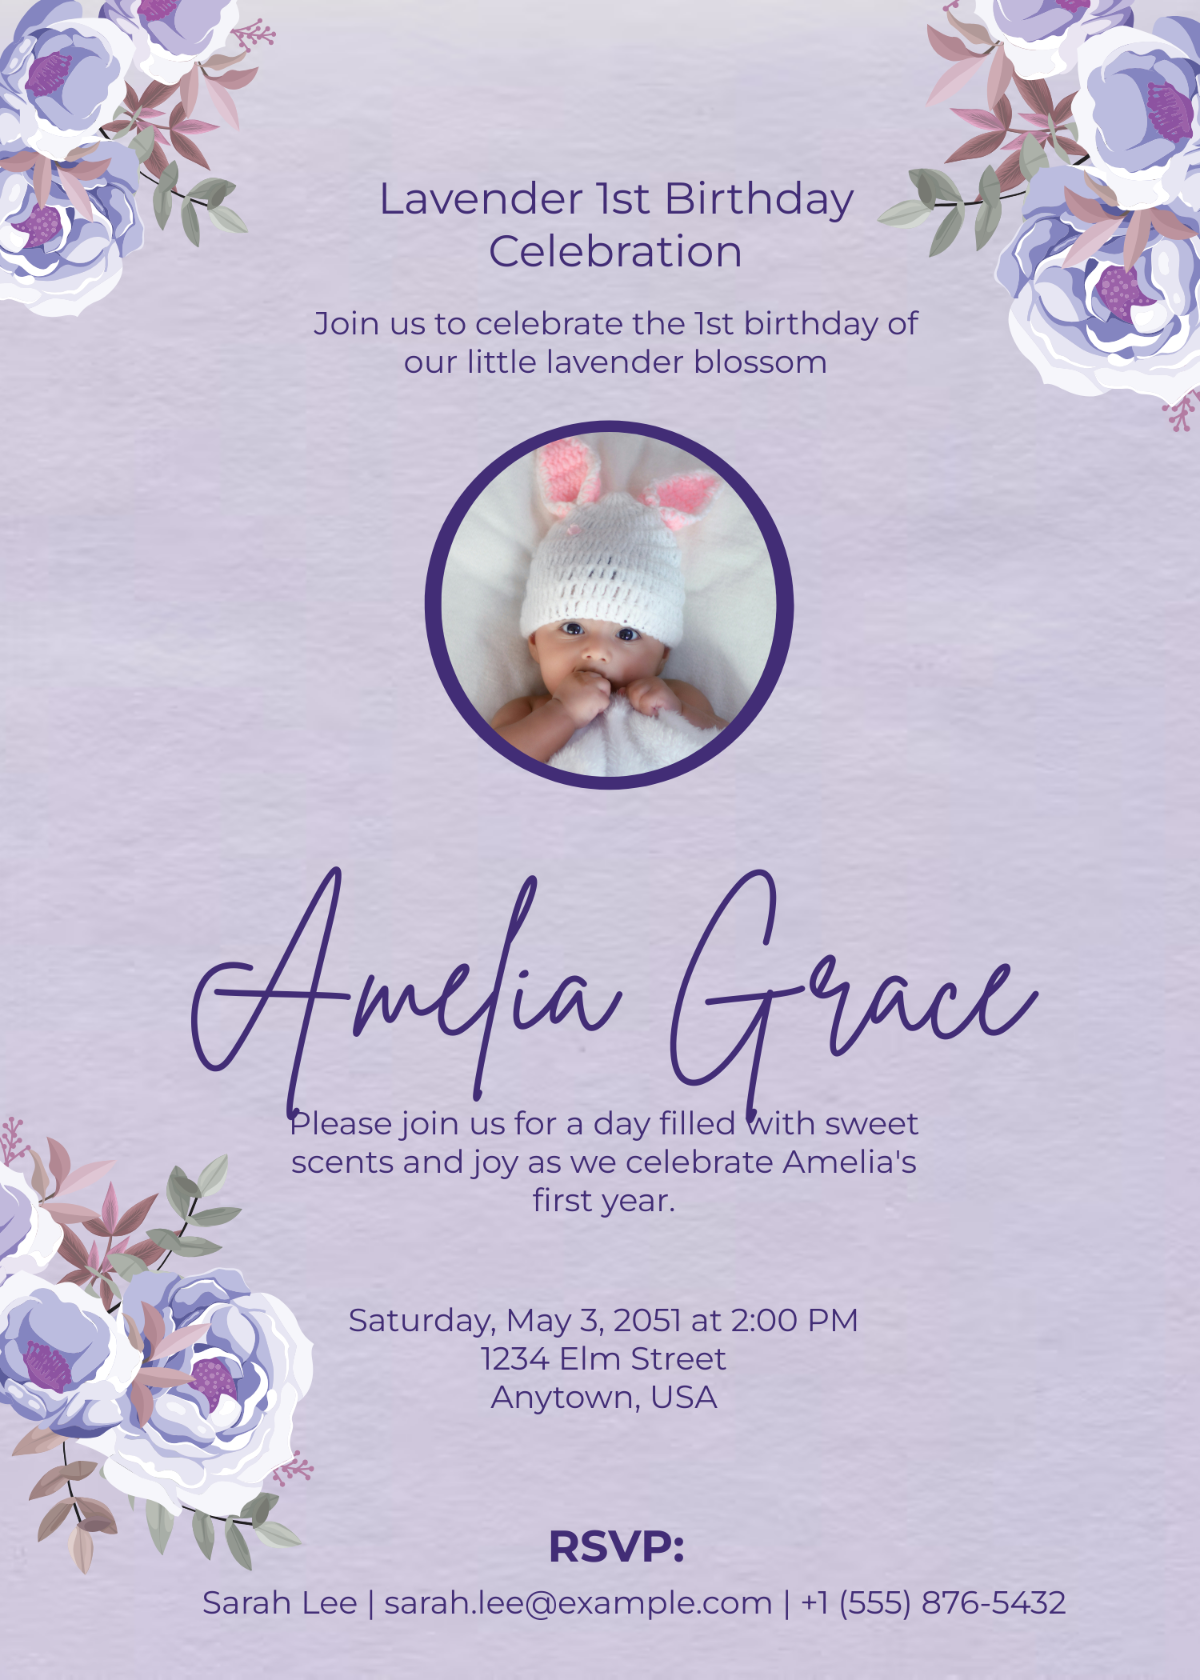 Lavender 1st Birthday Invitation